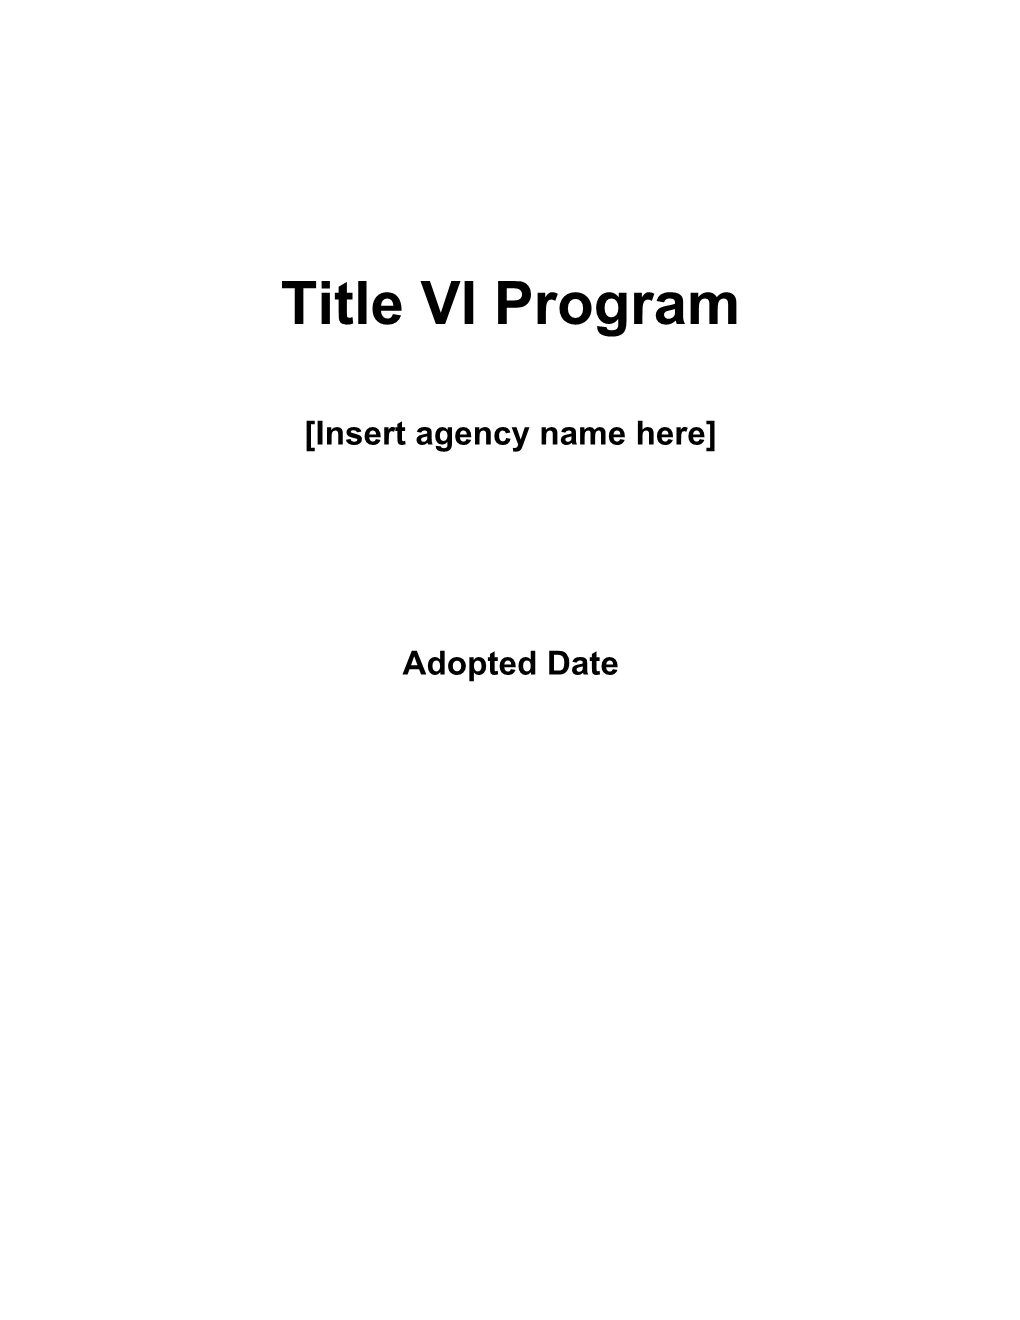 Section 5310 WV Title VI Program Template